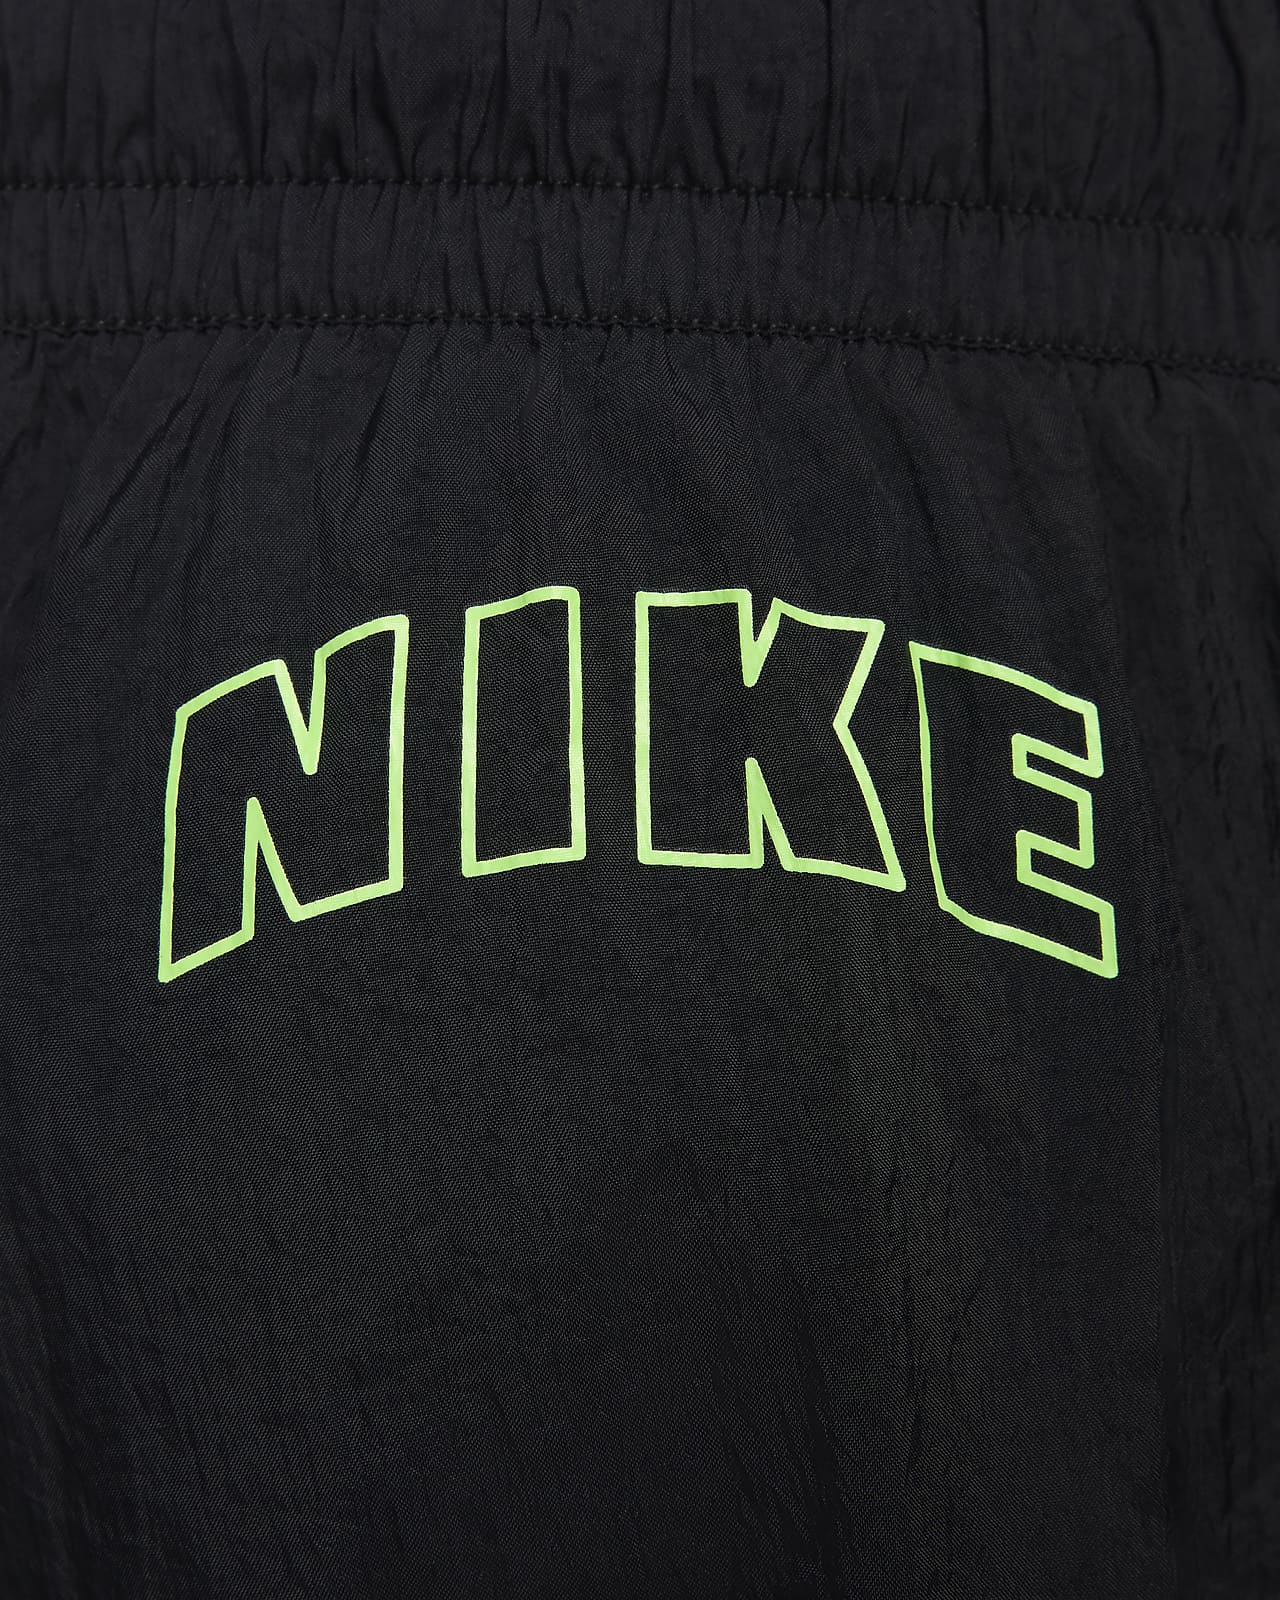 NIKE - Pants Completo Woven Negro Talla Mediana : : Ropa,  Zapatos y Accesorios